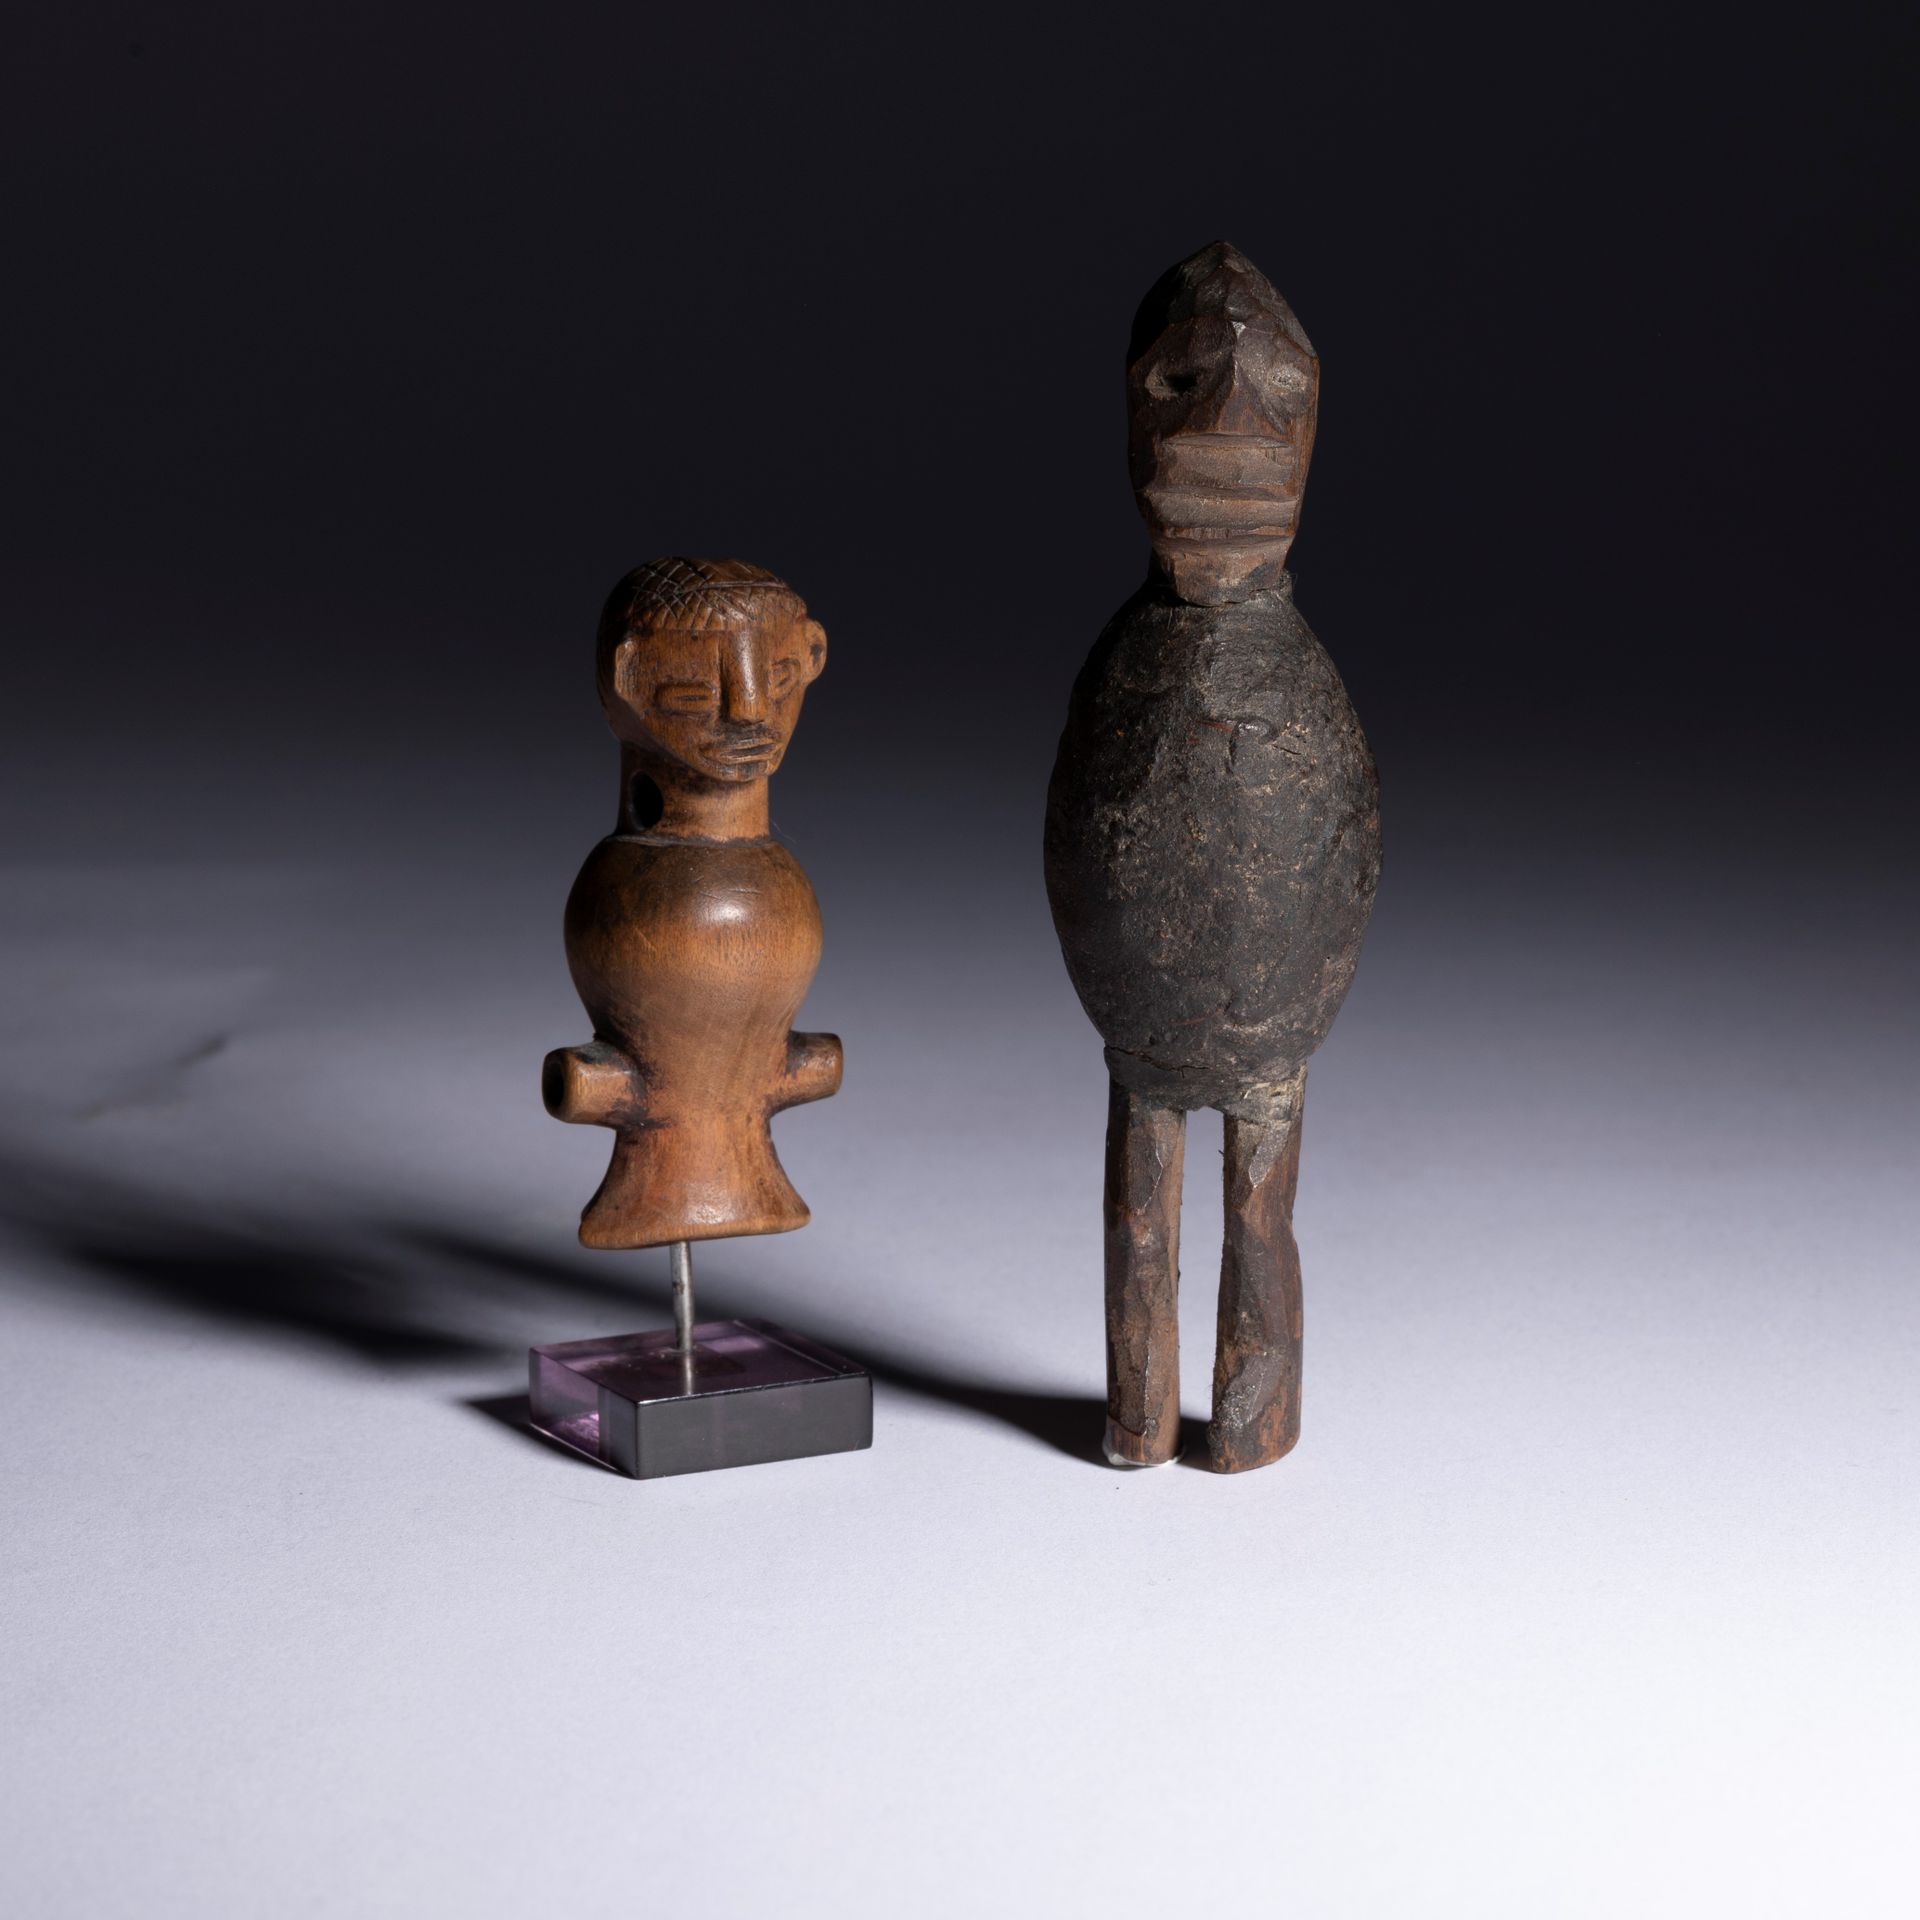 Null 一套哨子和一个微型比特基雕像。

Tchokwe和Téké，安哥拉和刚果民主共和国

木头，树脂，铜锈

H.6.5厘米和11.5厘米



出处 ：&hellip;